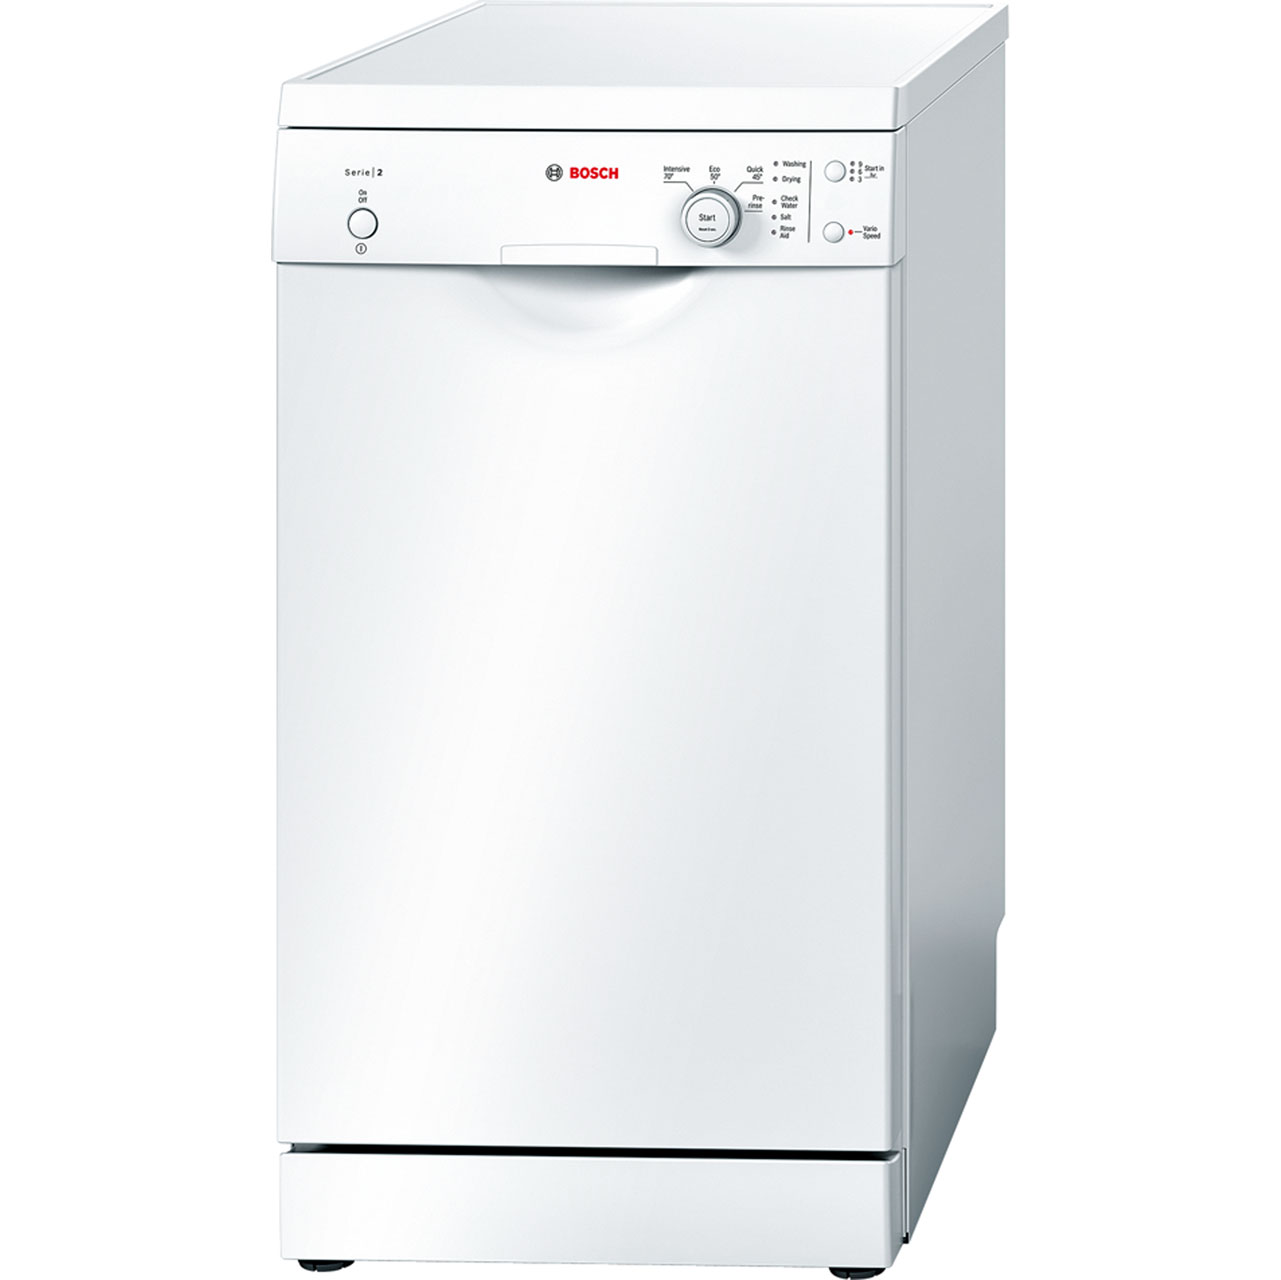 Bosch Serie 2 SPS40E32GB Free Standing Slimline Dishwasher in White